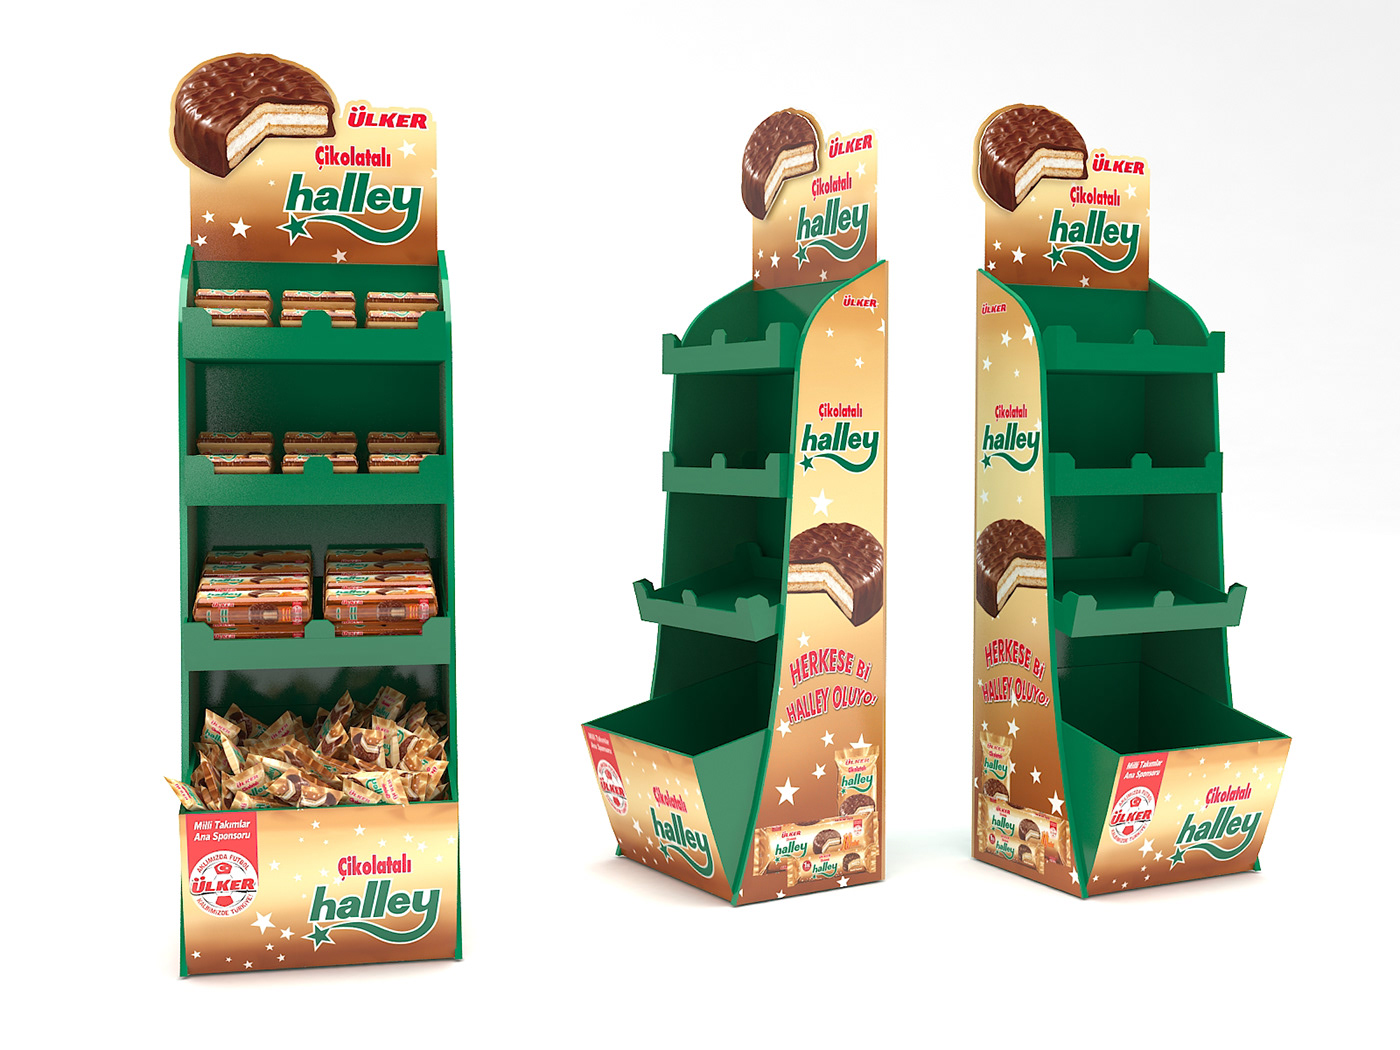 3D cardboard Display Halley herkese bi halley oluyor marketing   pop posm Stand ulker